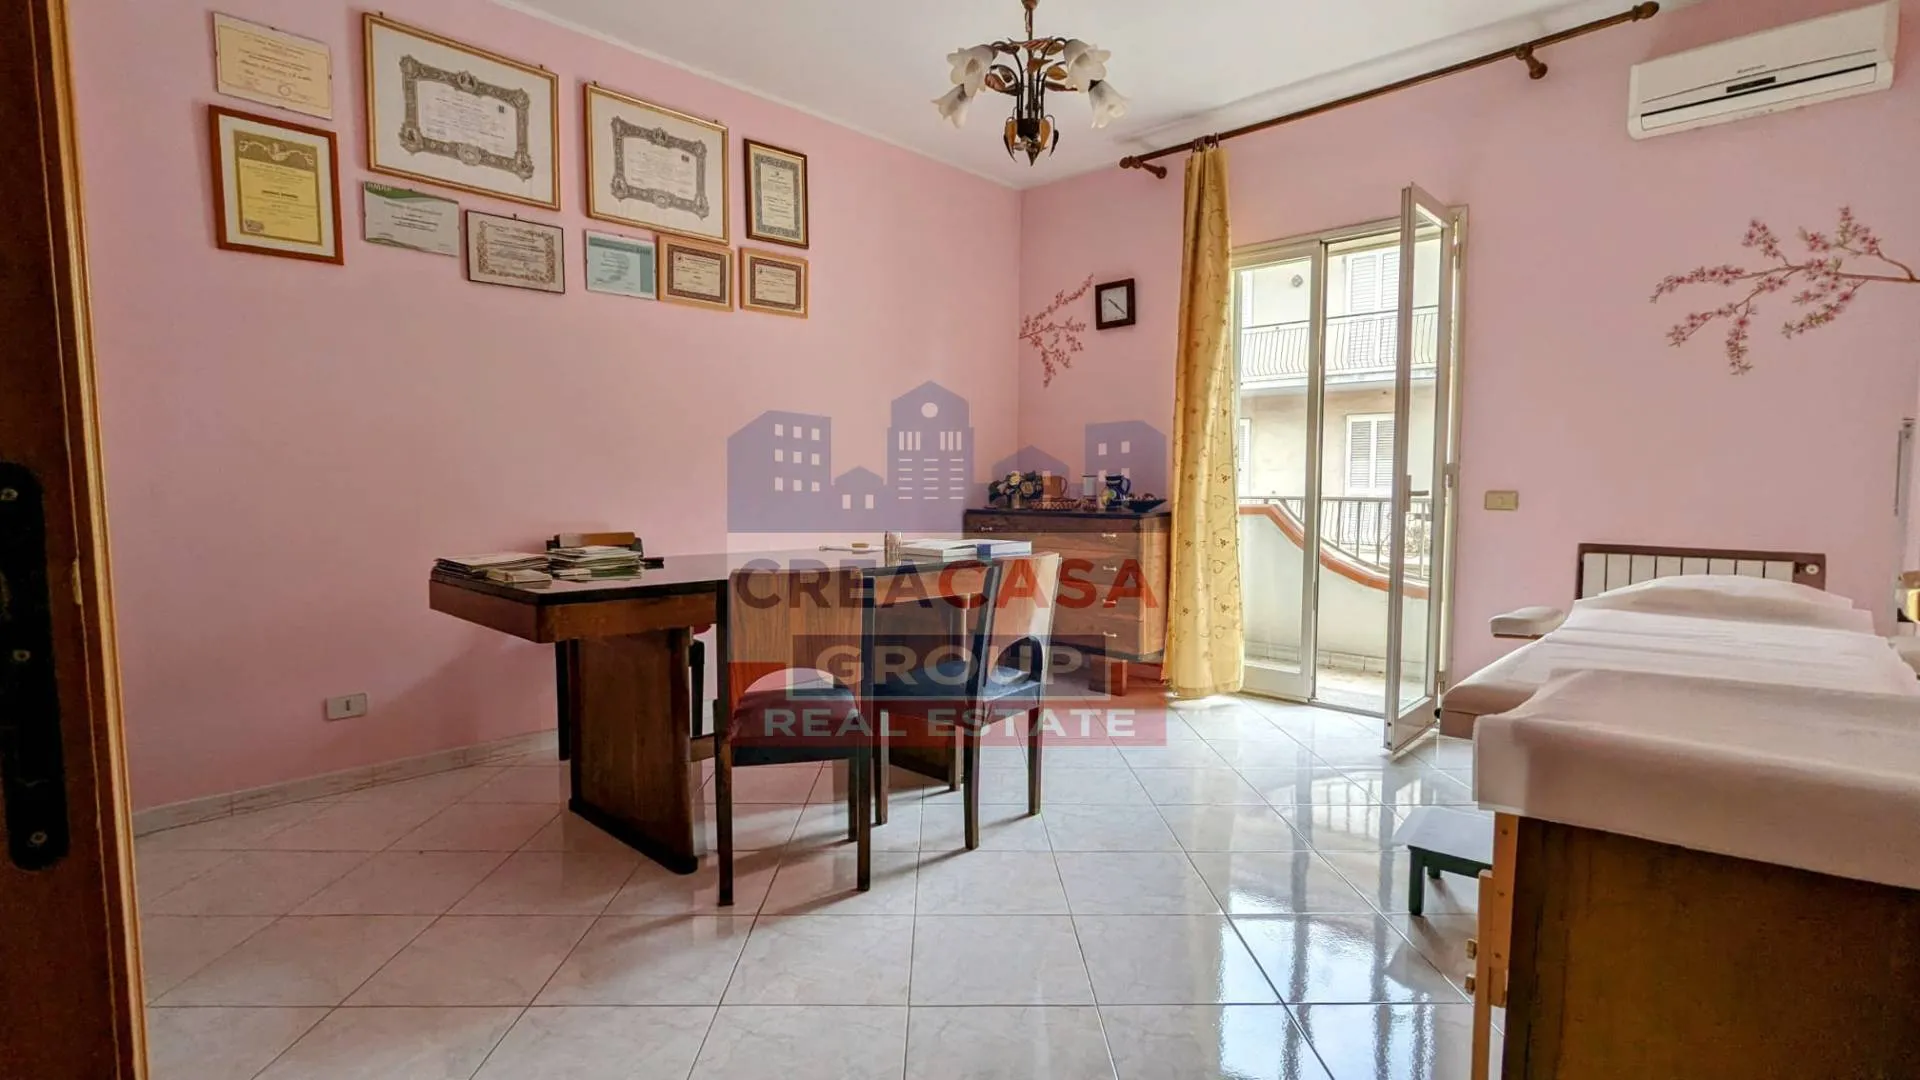 Immagine per Appartamento in vendita a Taormina via Francavilla